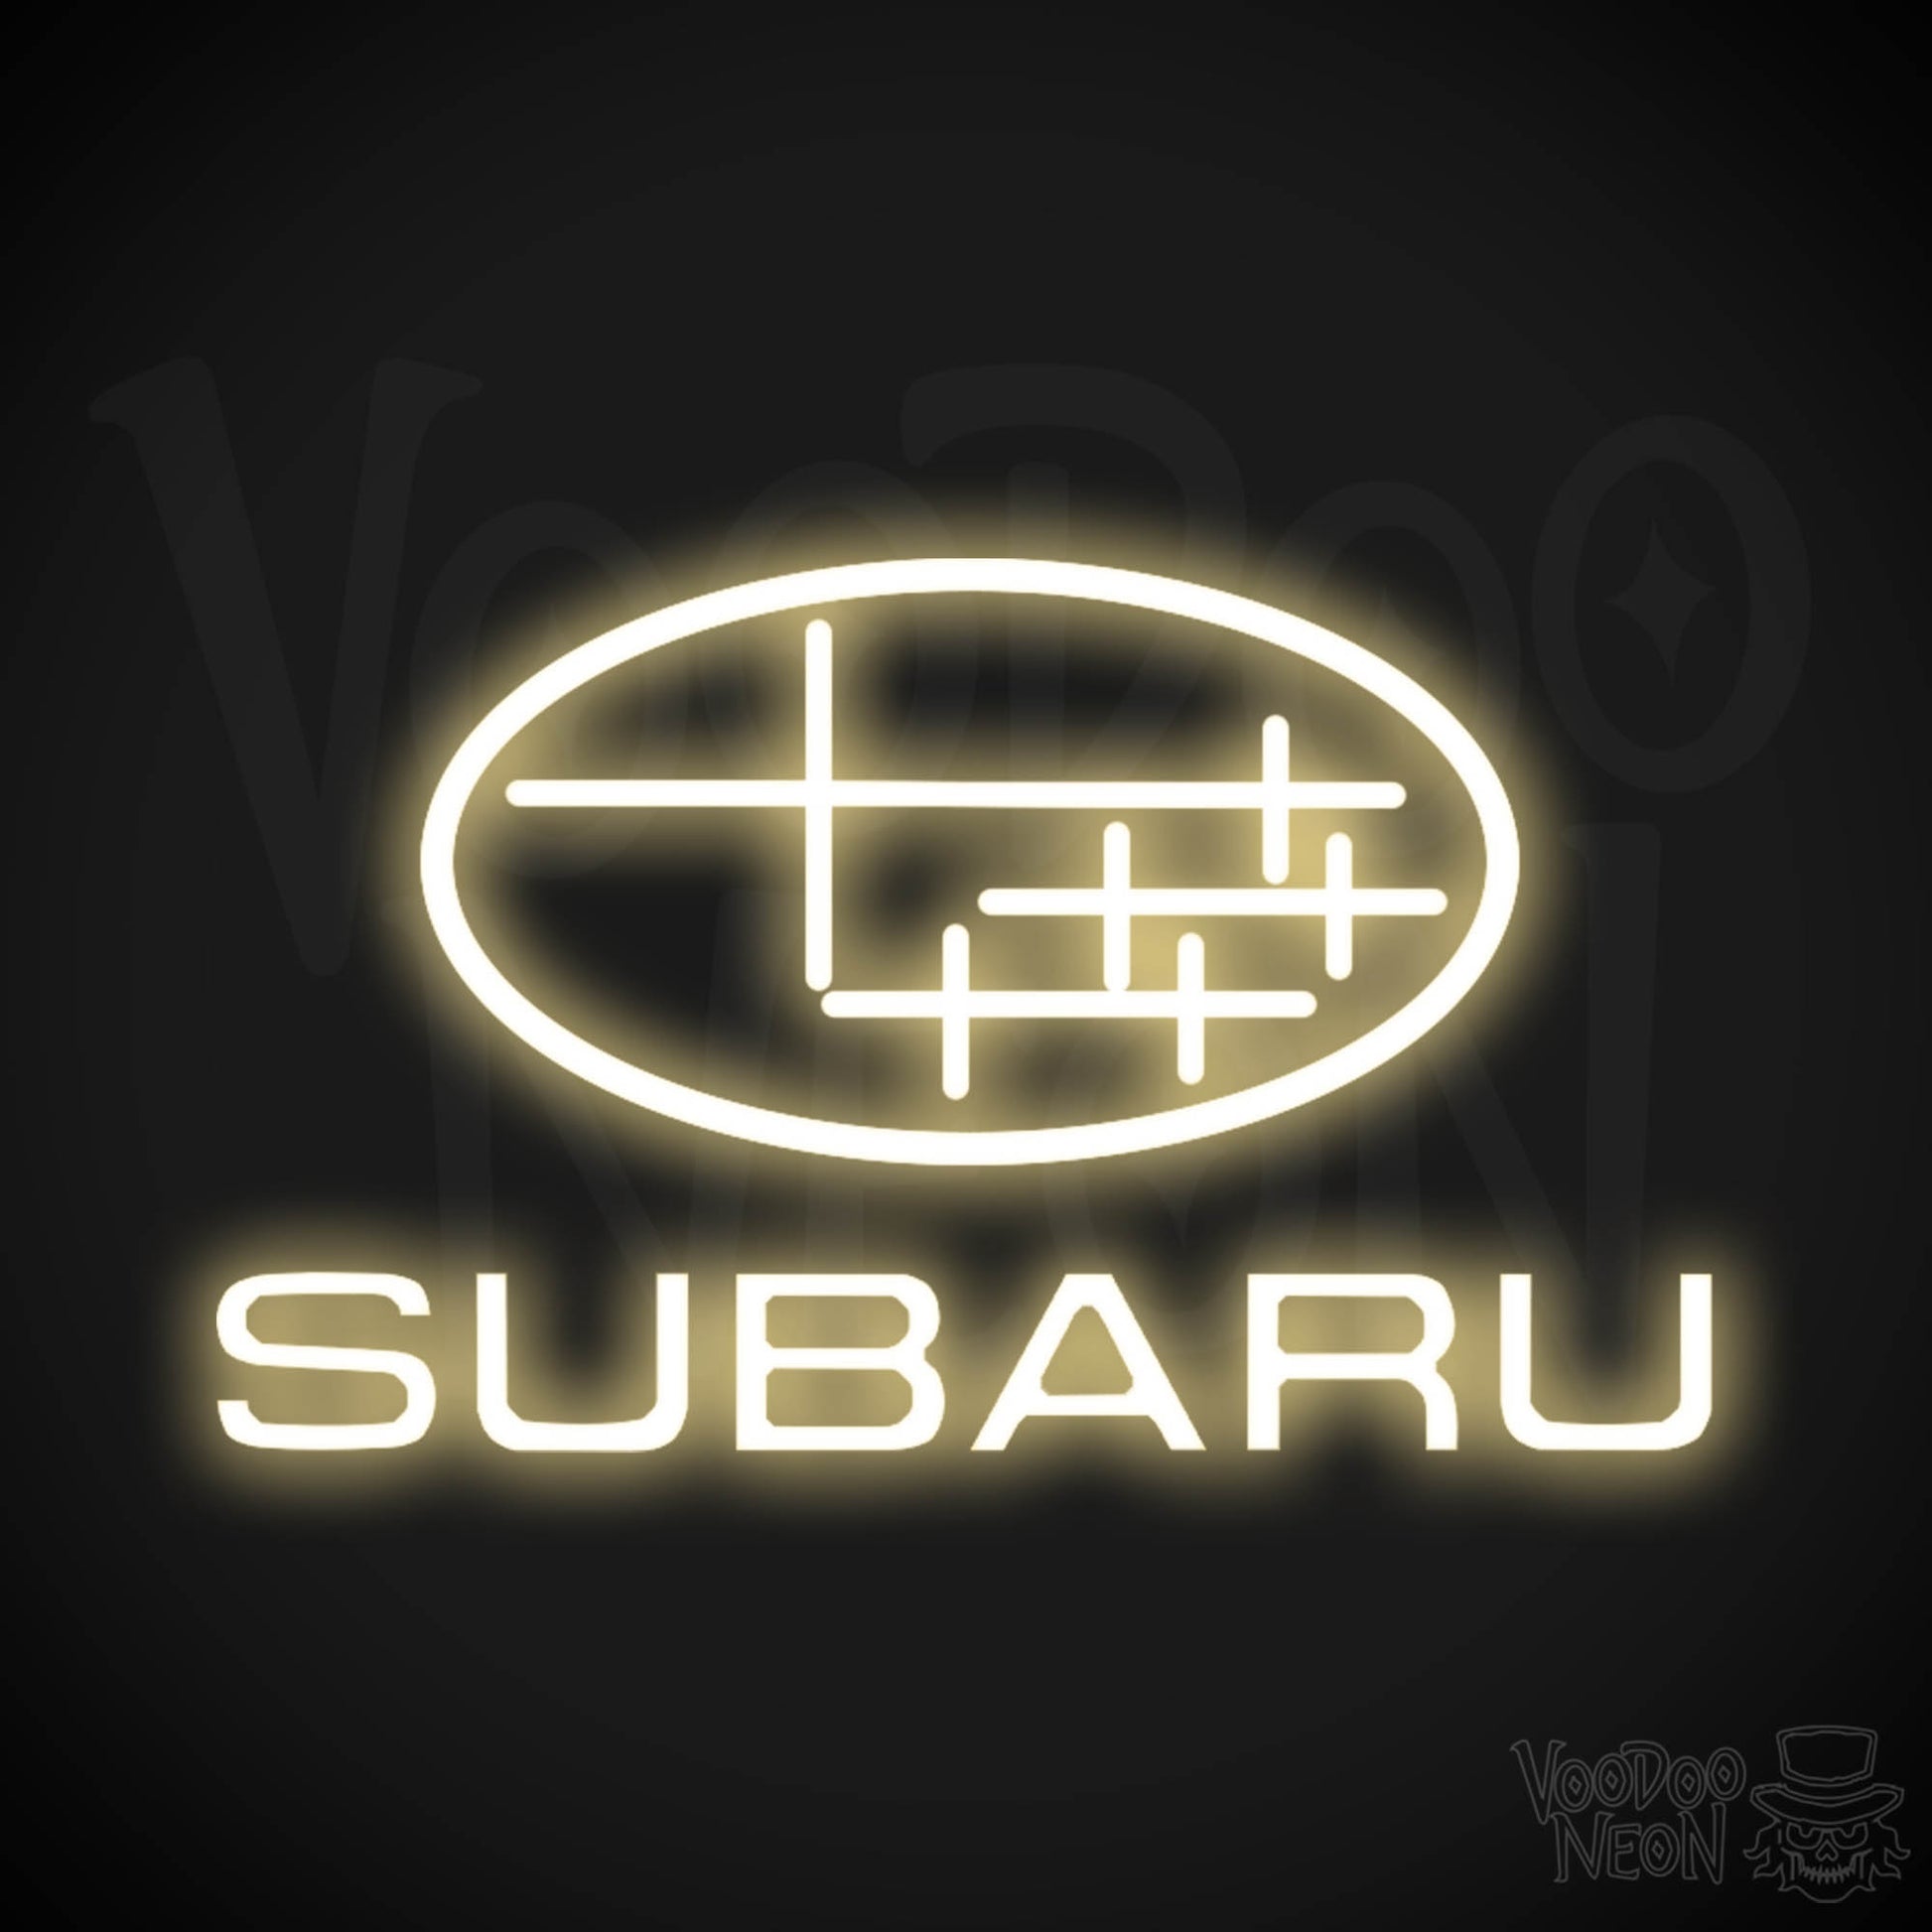 Subaru Neon Sign - Subaru Sign - Subaru Decor - Wall Art - Color Warm White